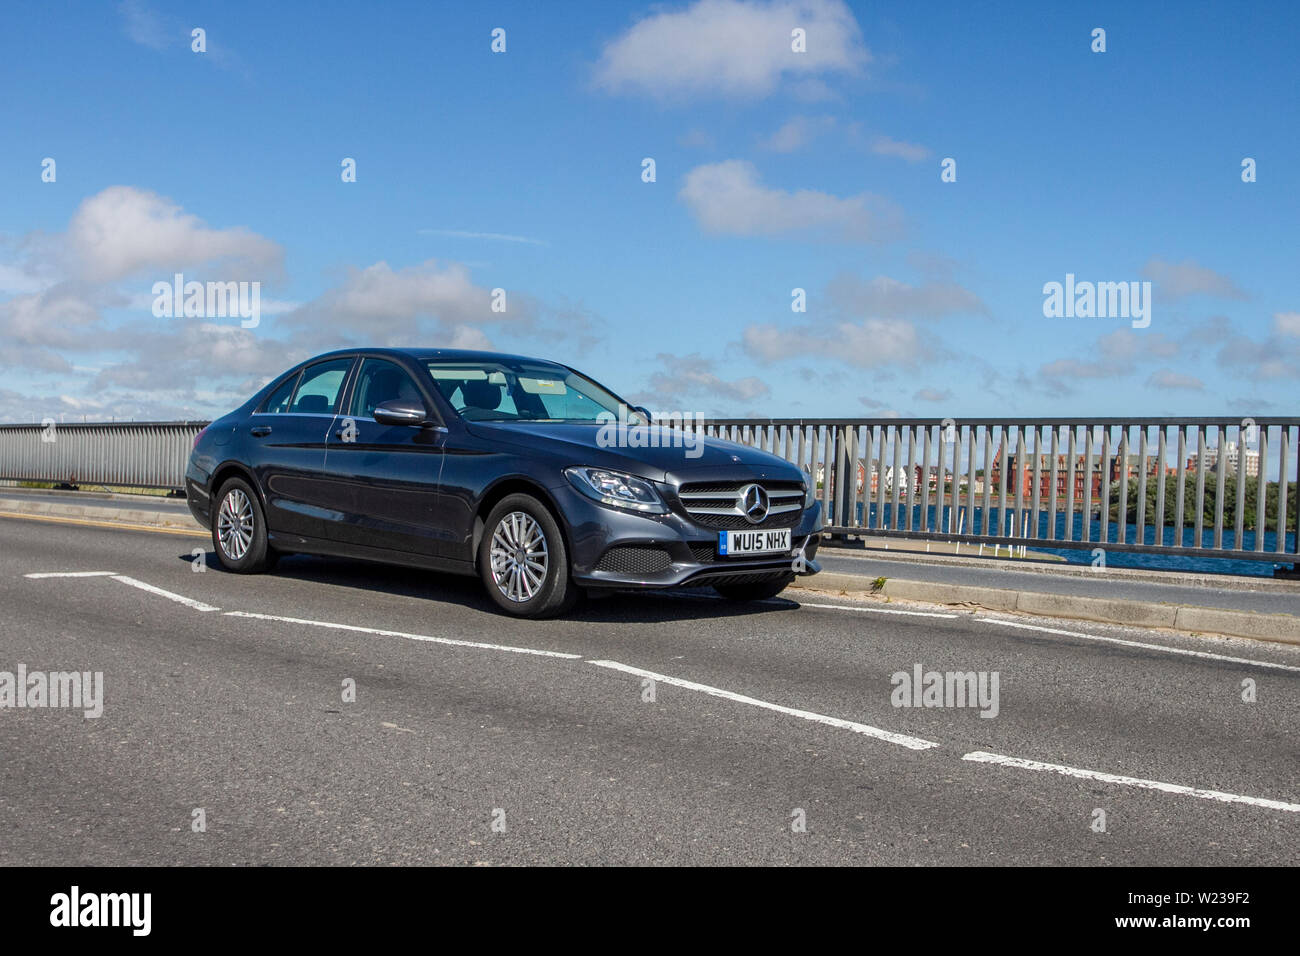 2015 Mercedes-Benz C250 SE Bluetec Auto; UK; Vehicular traffic, transport, modern, saloon cars, classics, historics, collectibles, on the seafront promenade, Southport, UK Stock Photo